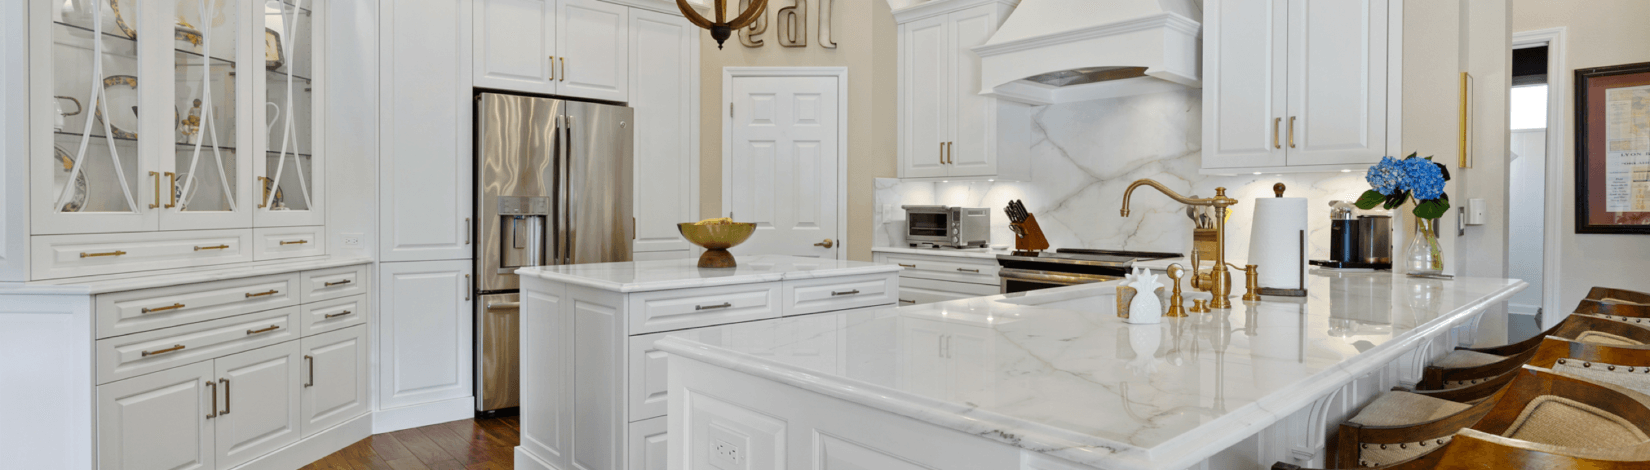 Luxury white kitchen with gold decorative hardware